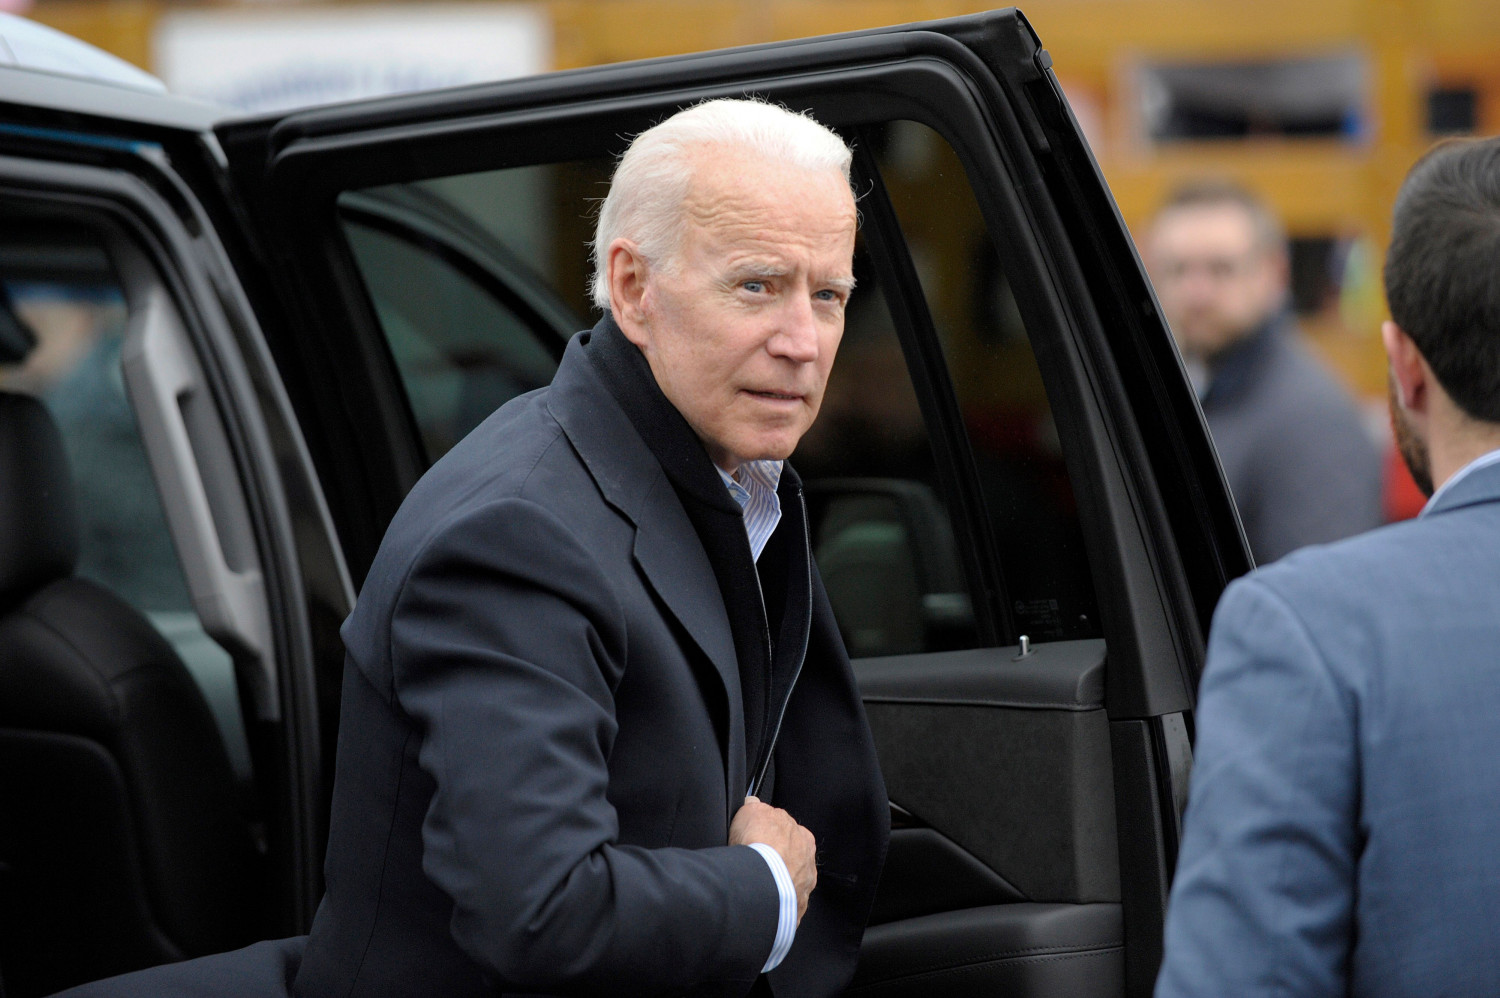 Biden’s Presidential Bid Puts Spotlight on Spygate Scandal